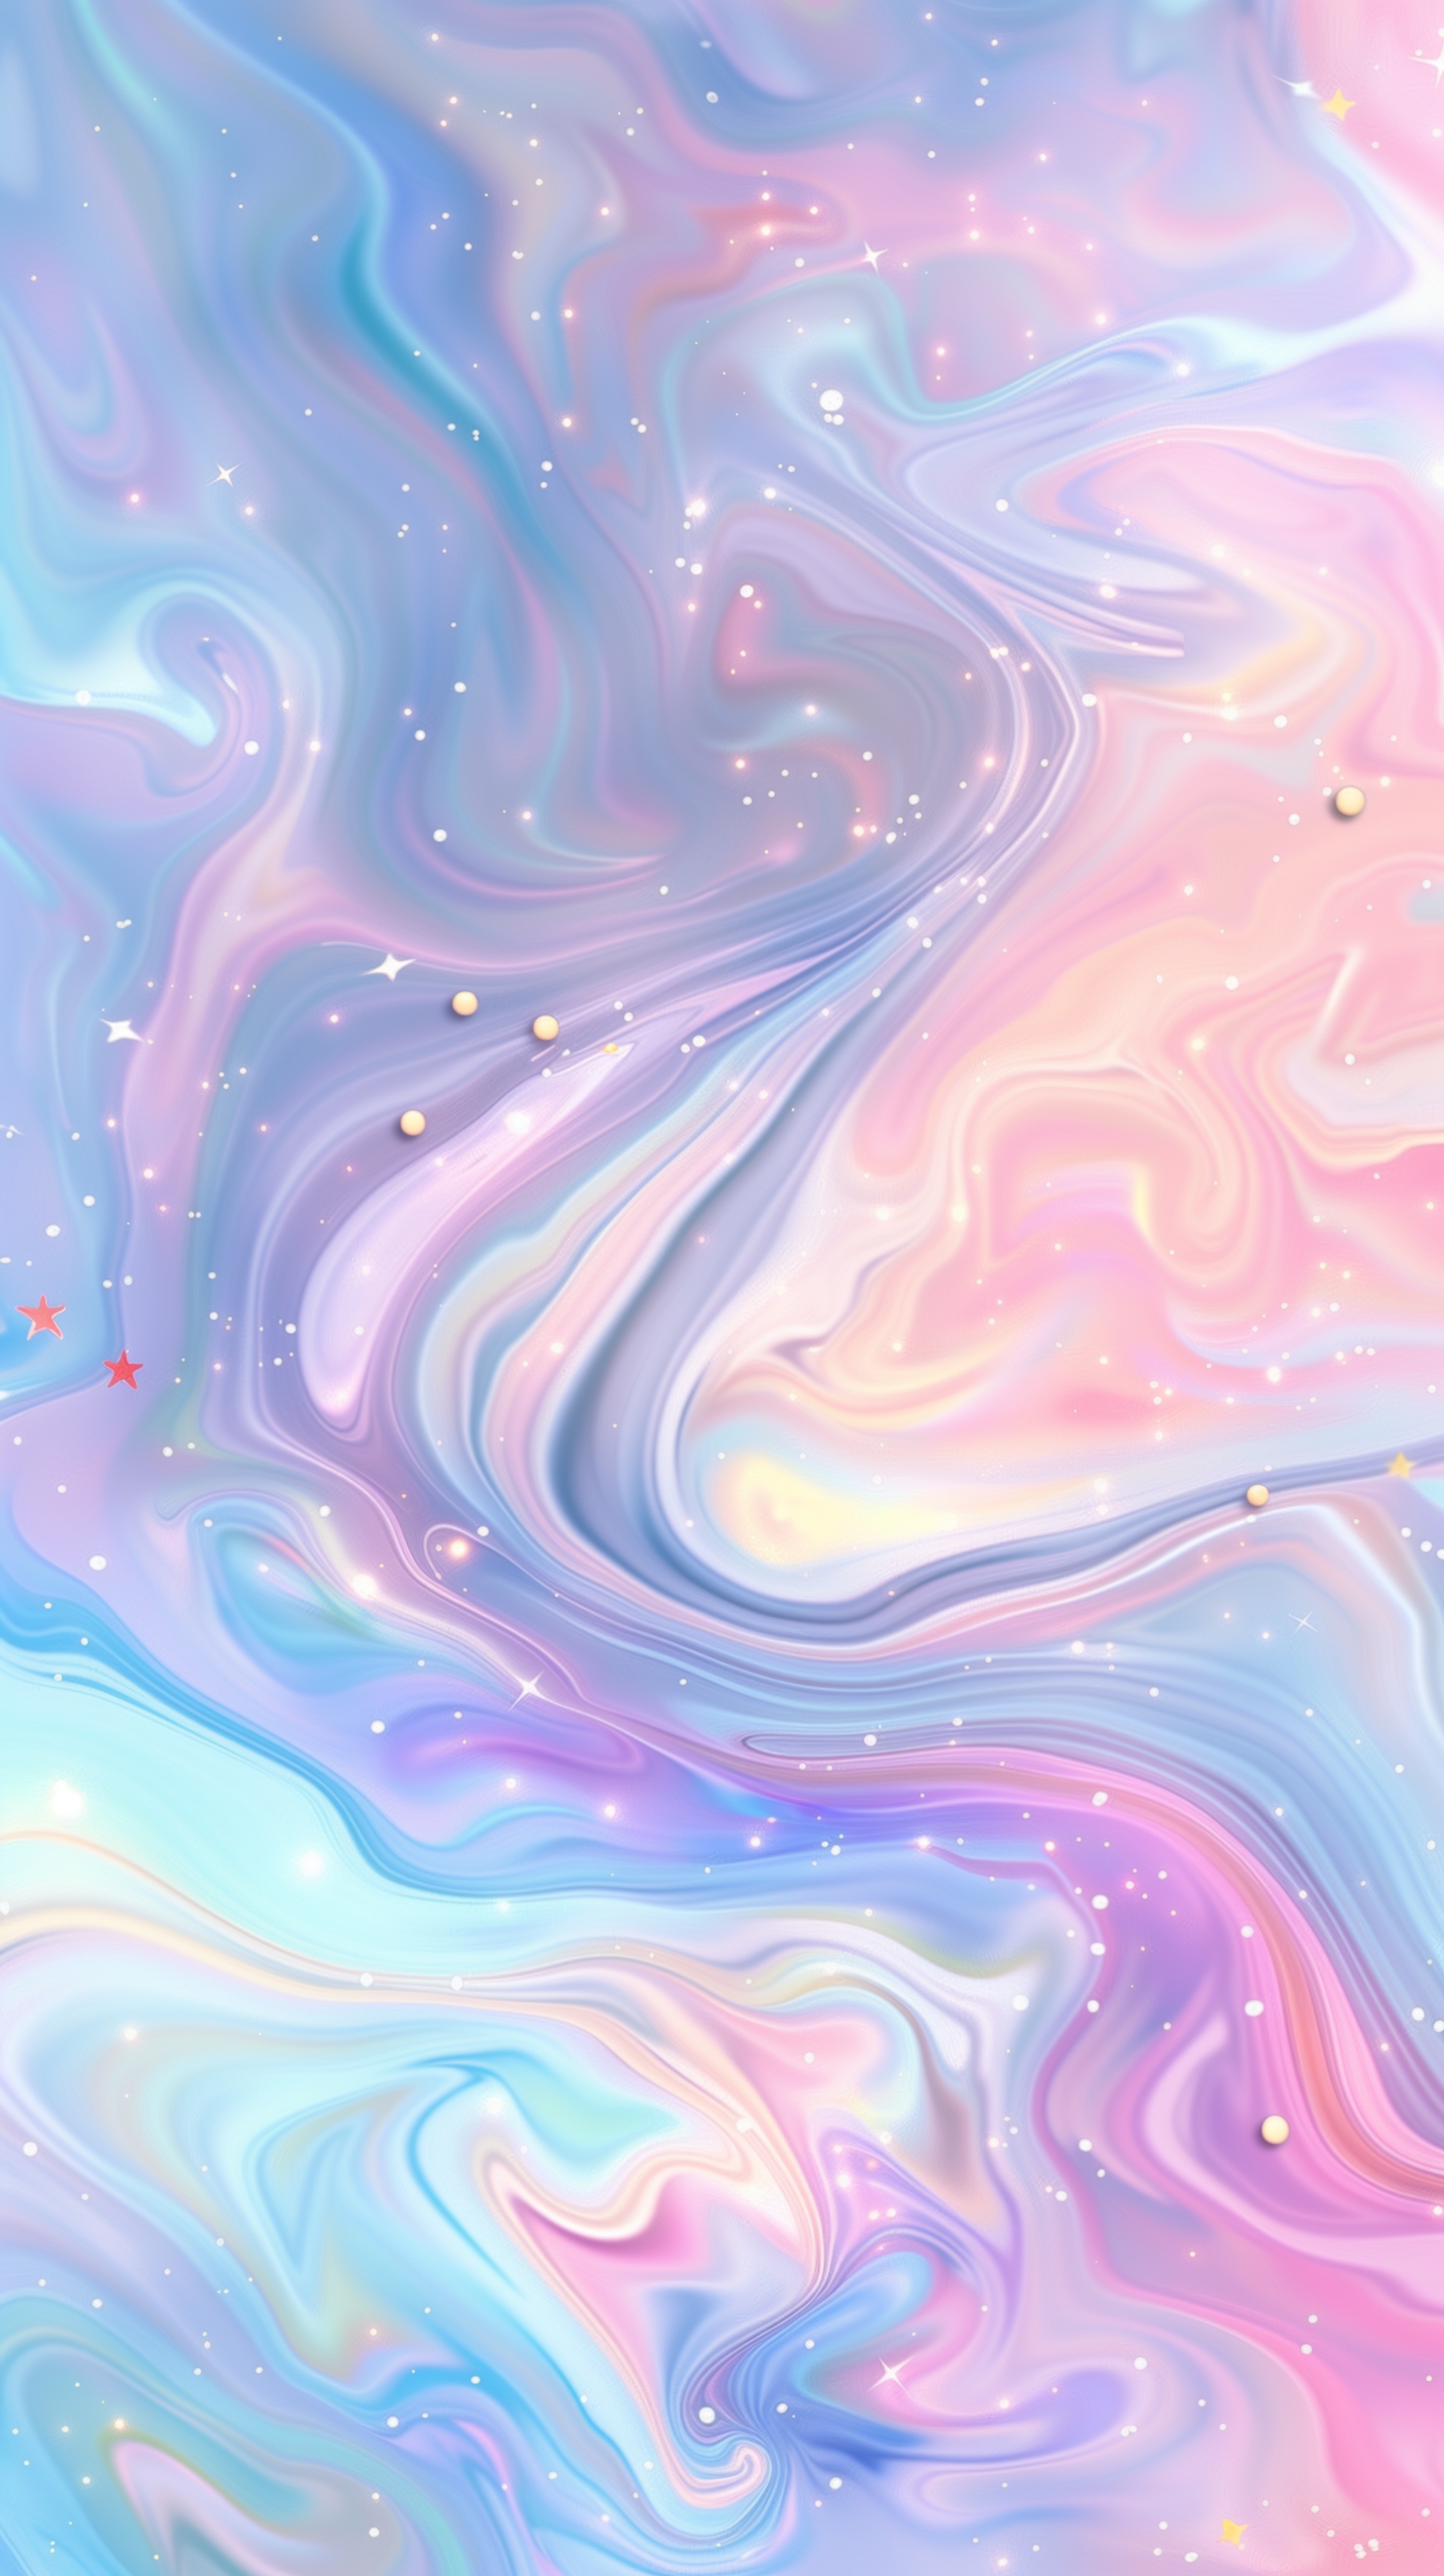 Swirling Pastel Galaxy with Stars Hintergrund[58935a042c3f47169f40]